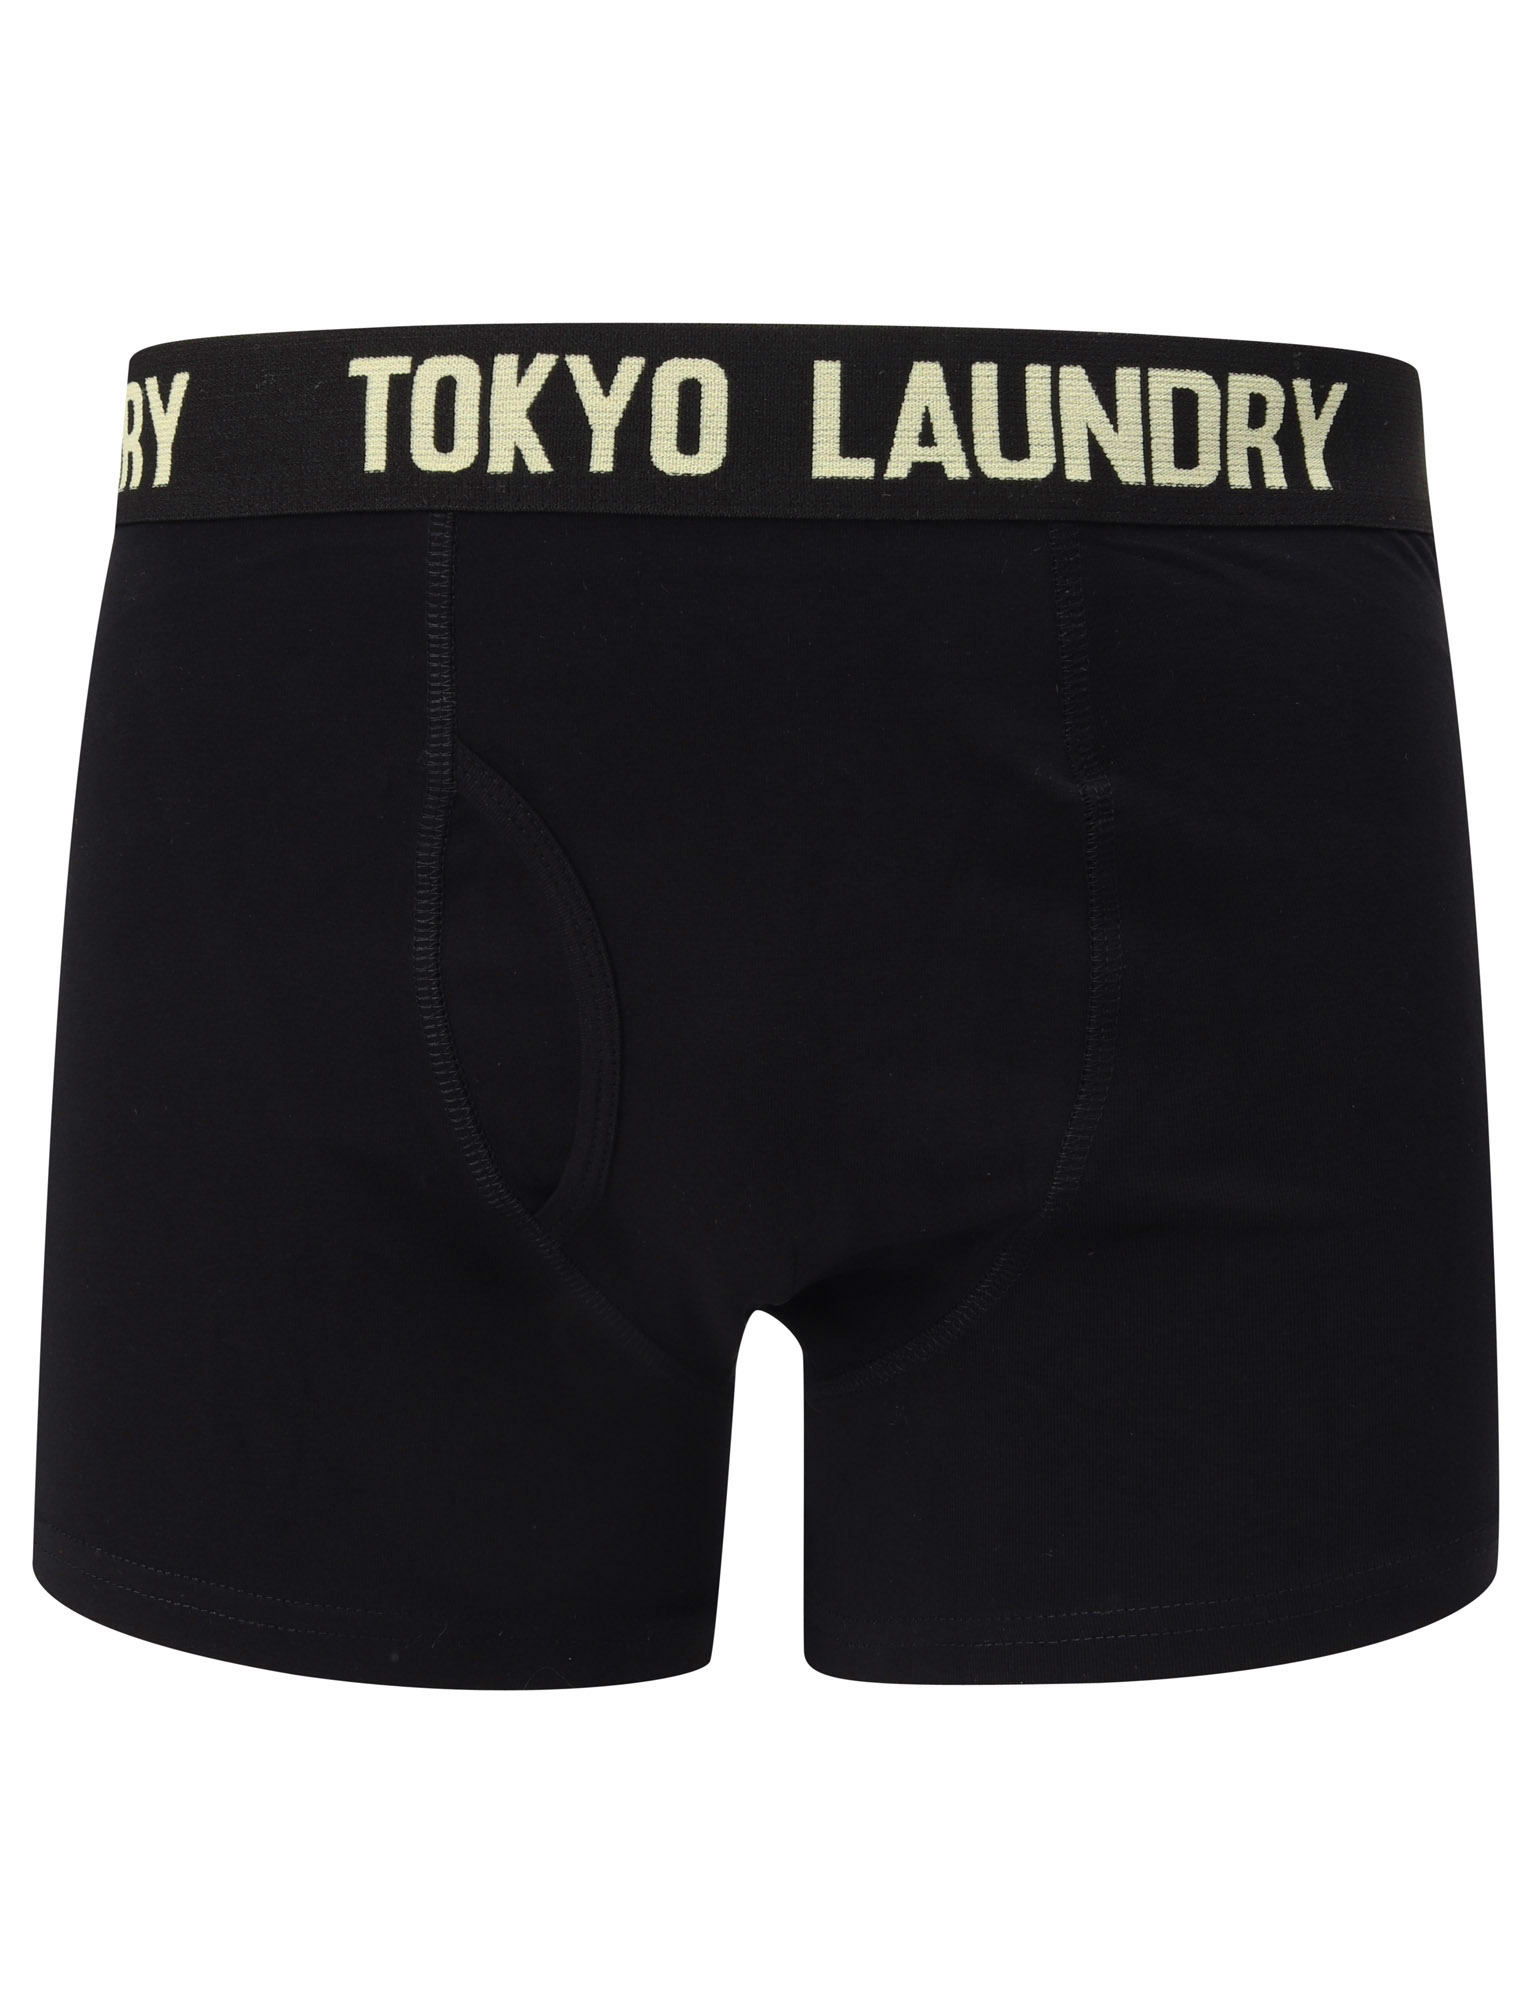 New Mens Tokyo Laundry (2 Pack) Cotton Rich Boxer Shorts Set Trunks ...